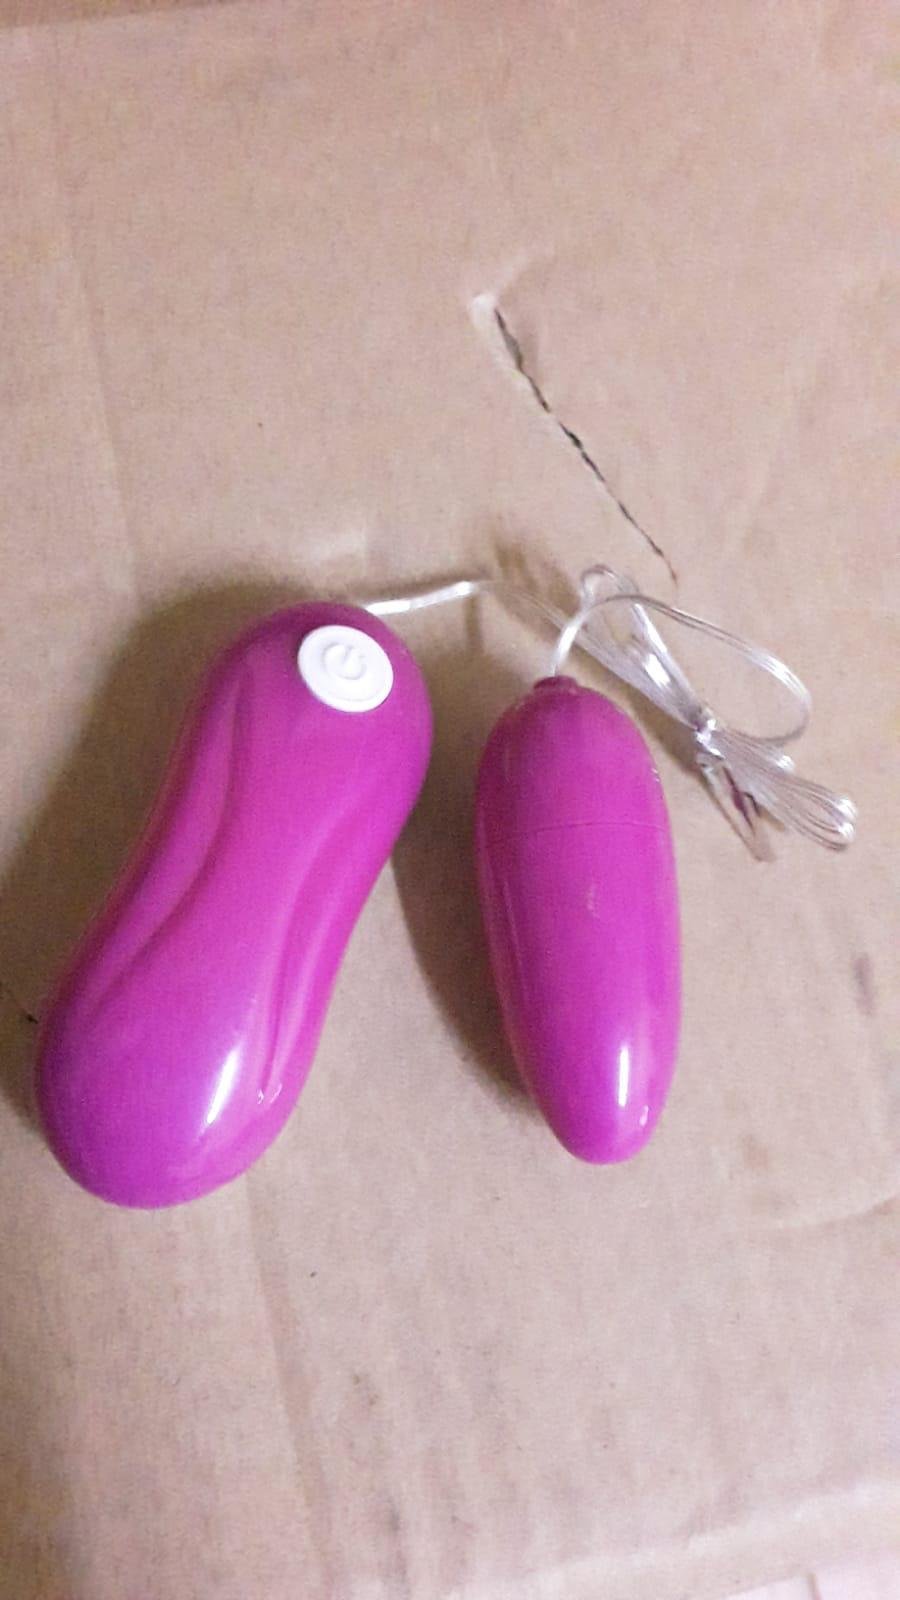 Vibrador de bala con Control remoto para mujer, masajeador corporal de punto G, juguete sexual femenino, productos para adultos